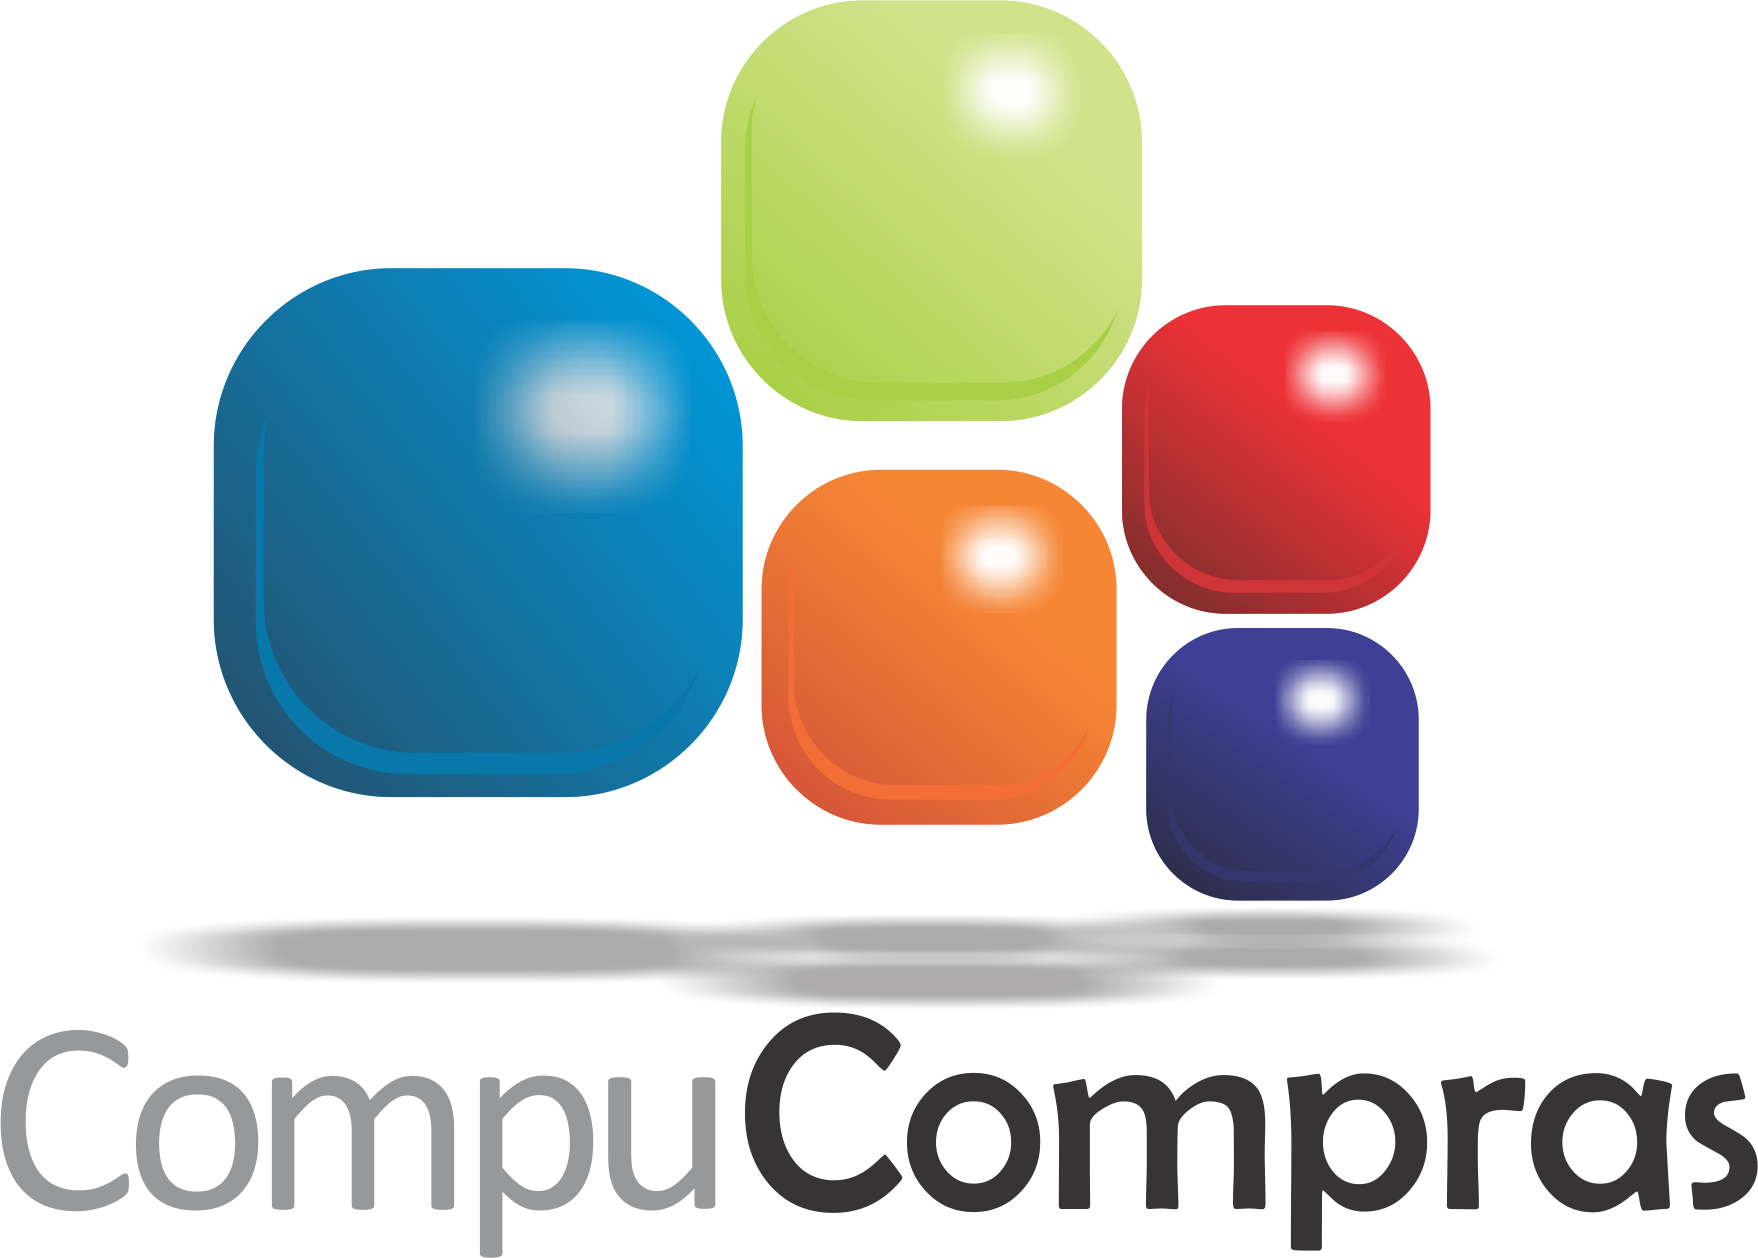 CompuCompras